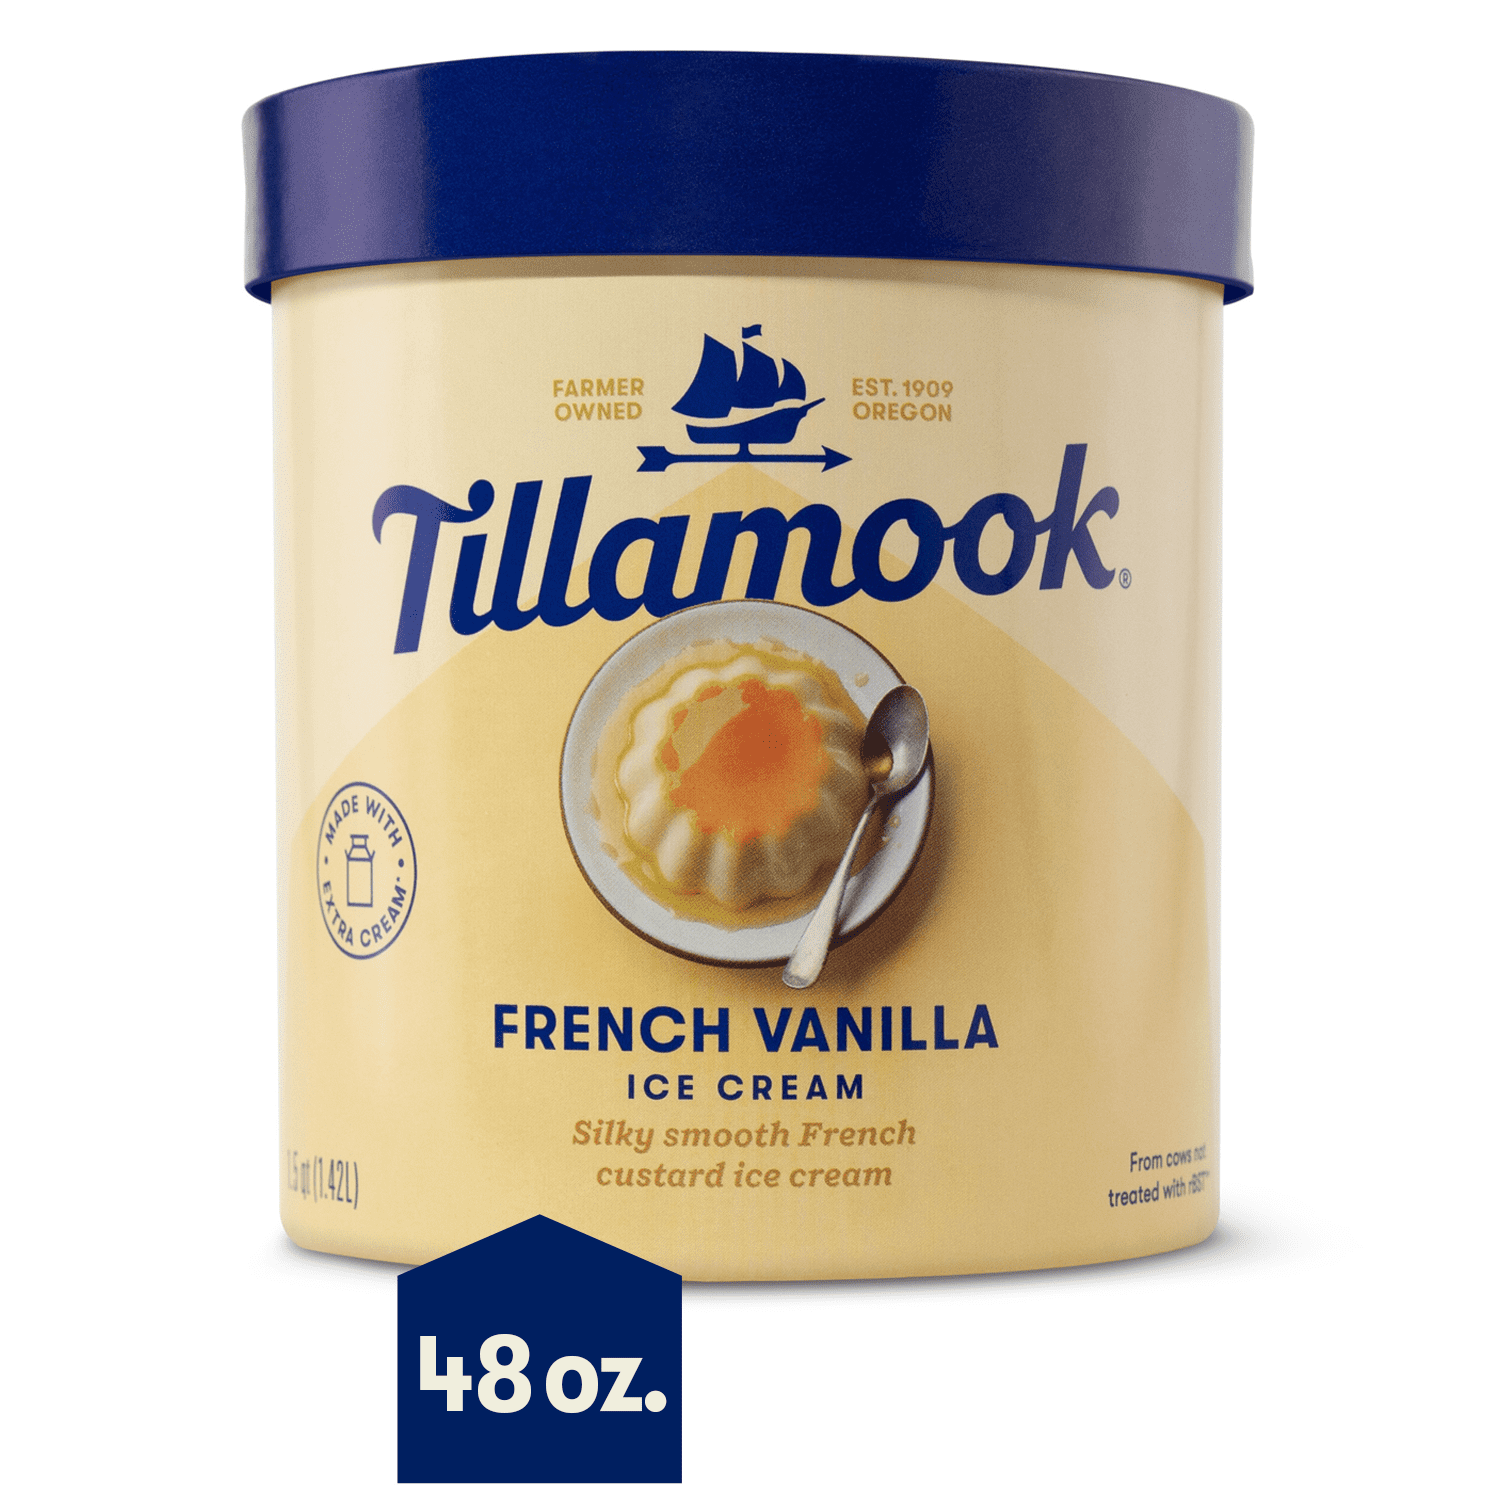 Tillamook Old Fashioned Vanilla 2% Greek Yogurt, Blended, 5.3 oz